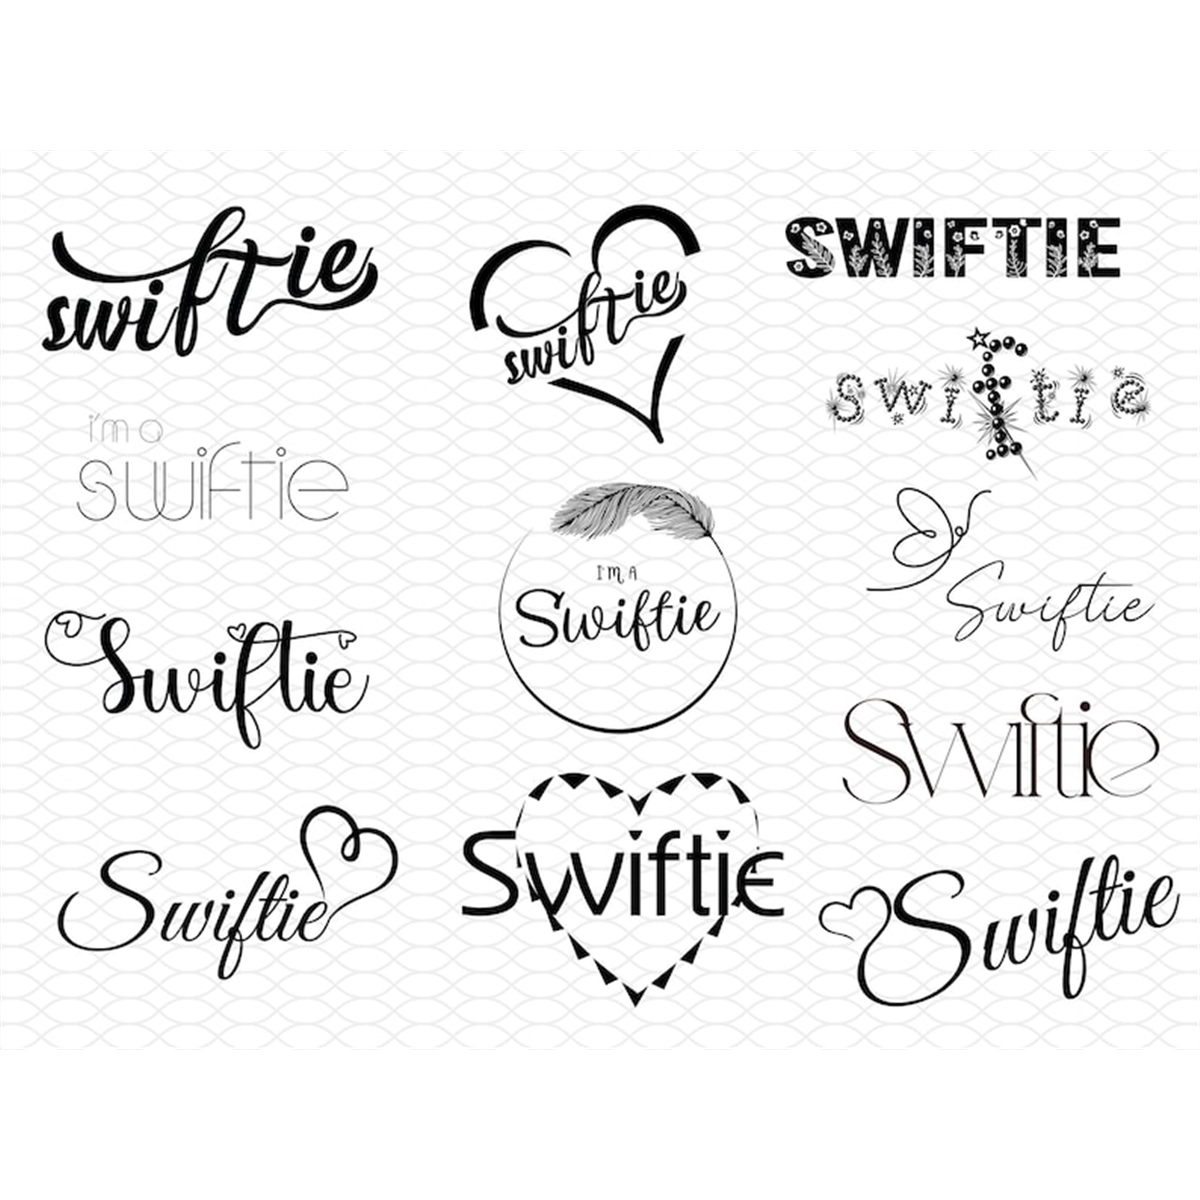 swiftie-12-unique-designs-taylor-swift-svg-karma-swifties-image-1